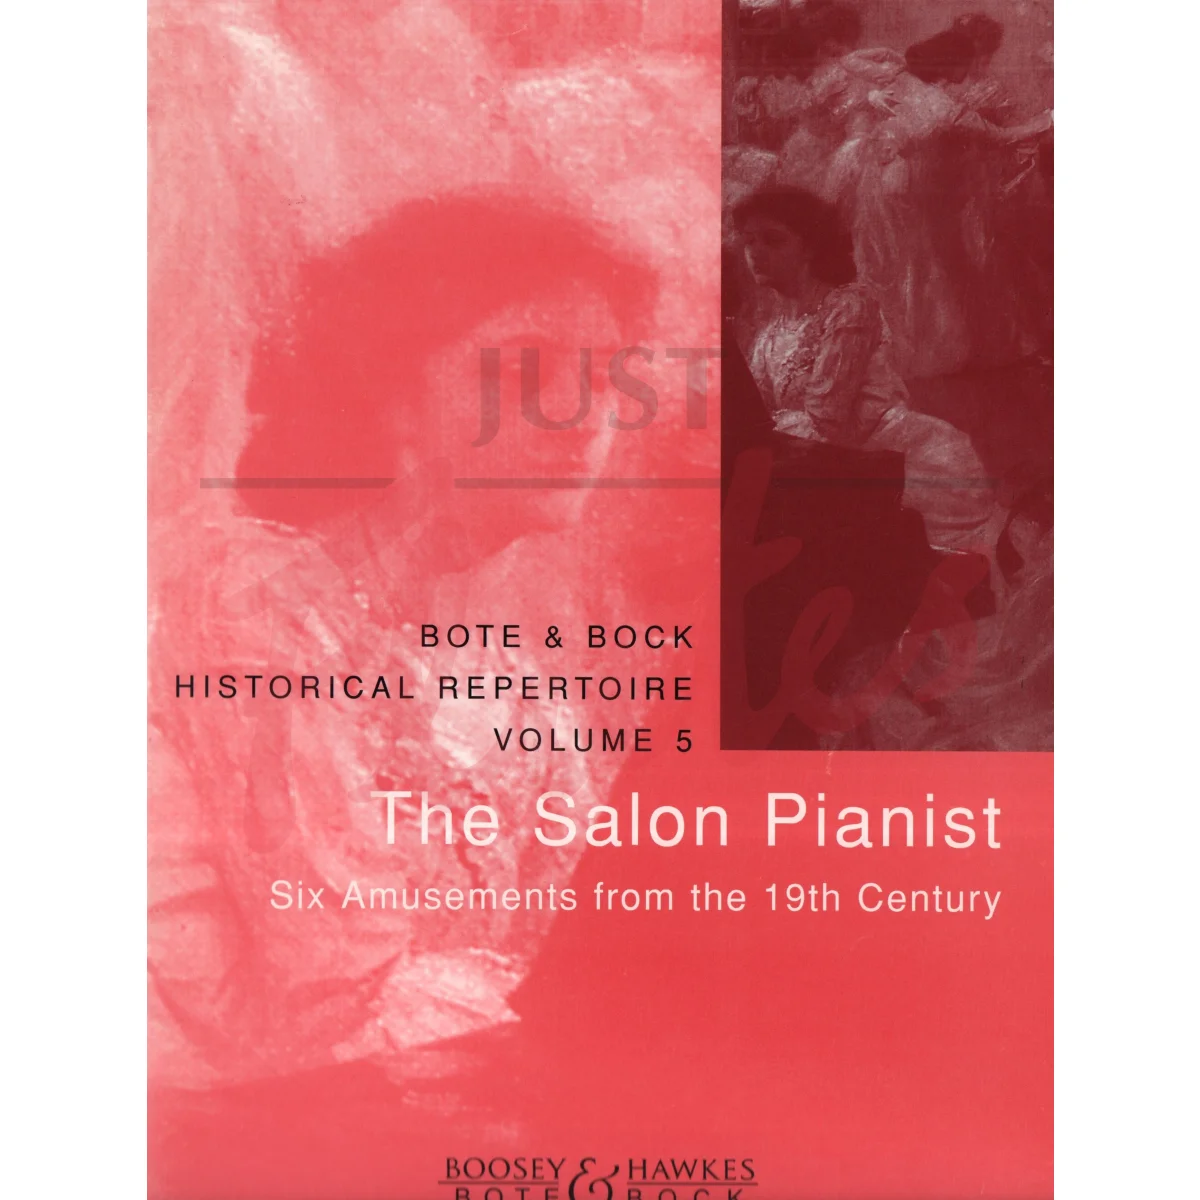 The Salon Pianist